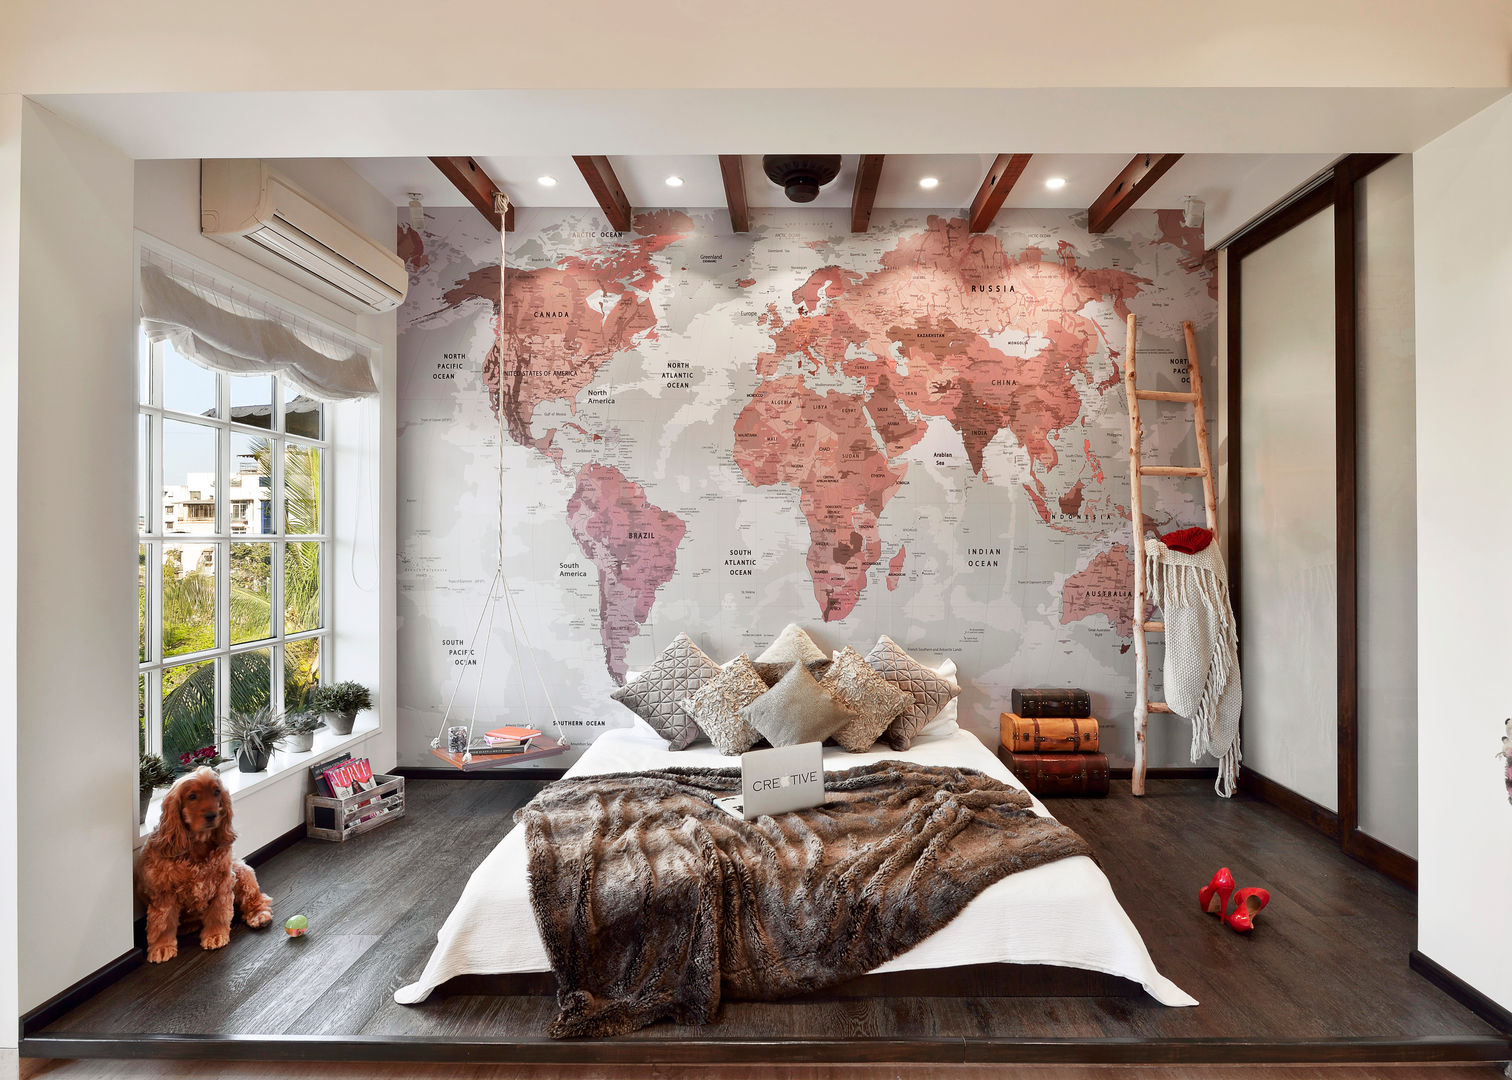 The bed SAGA Design Modern style bedroom Solid Wood Multicolored Bedroom,World map,Rafters,Wenge wood flooring